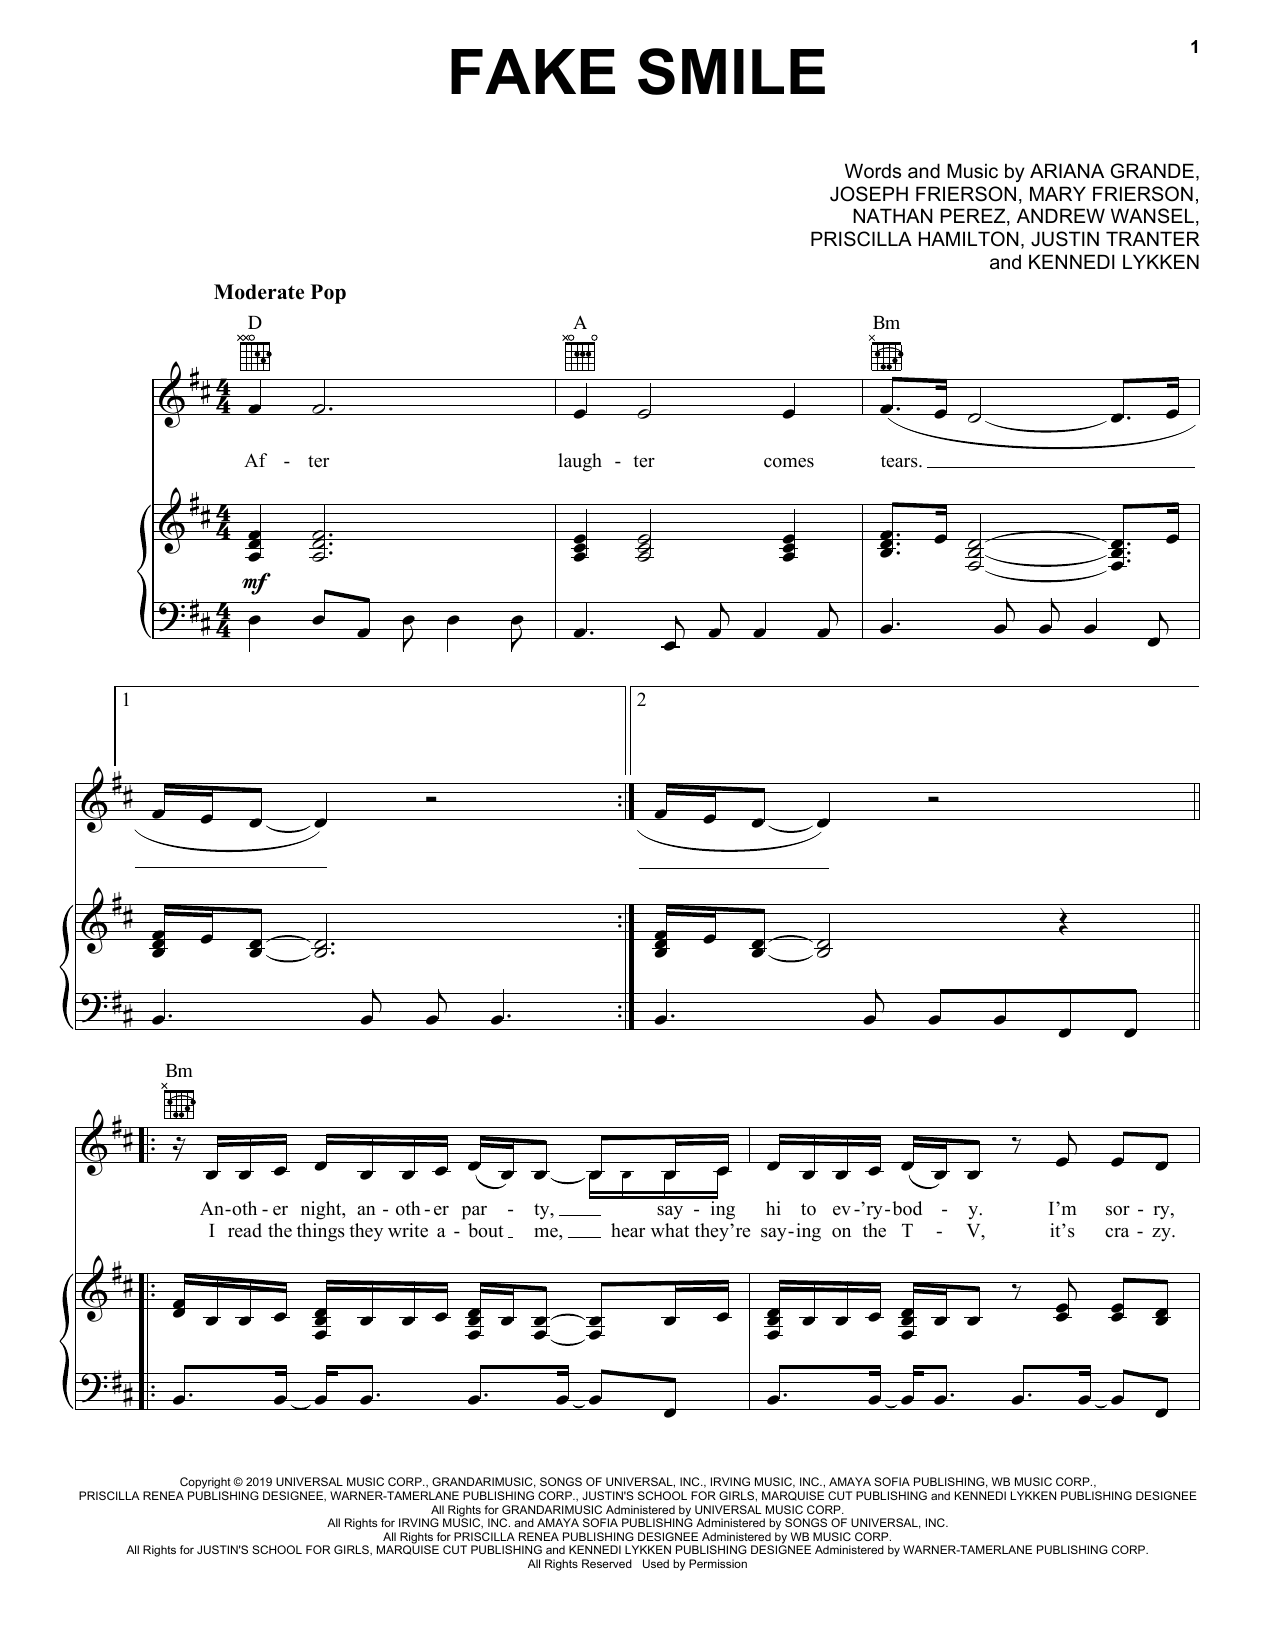 Ariana Grande Fake Smile Sheet Music Notes Chords Download Printable Piano Vocal Guitar Right Hand Melody Sku 411535